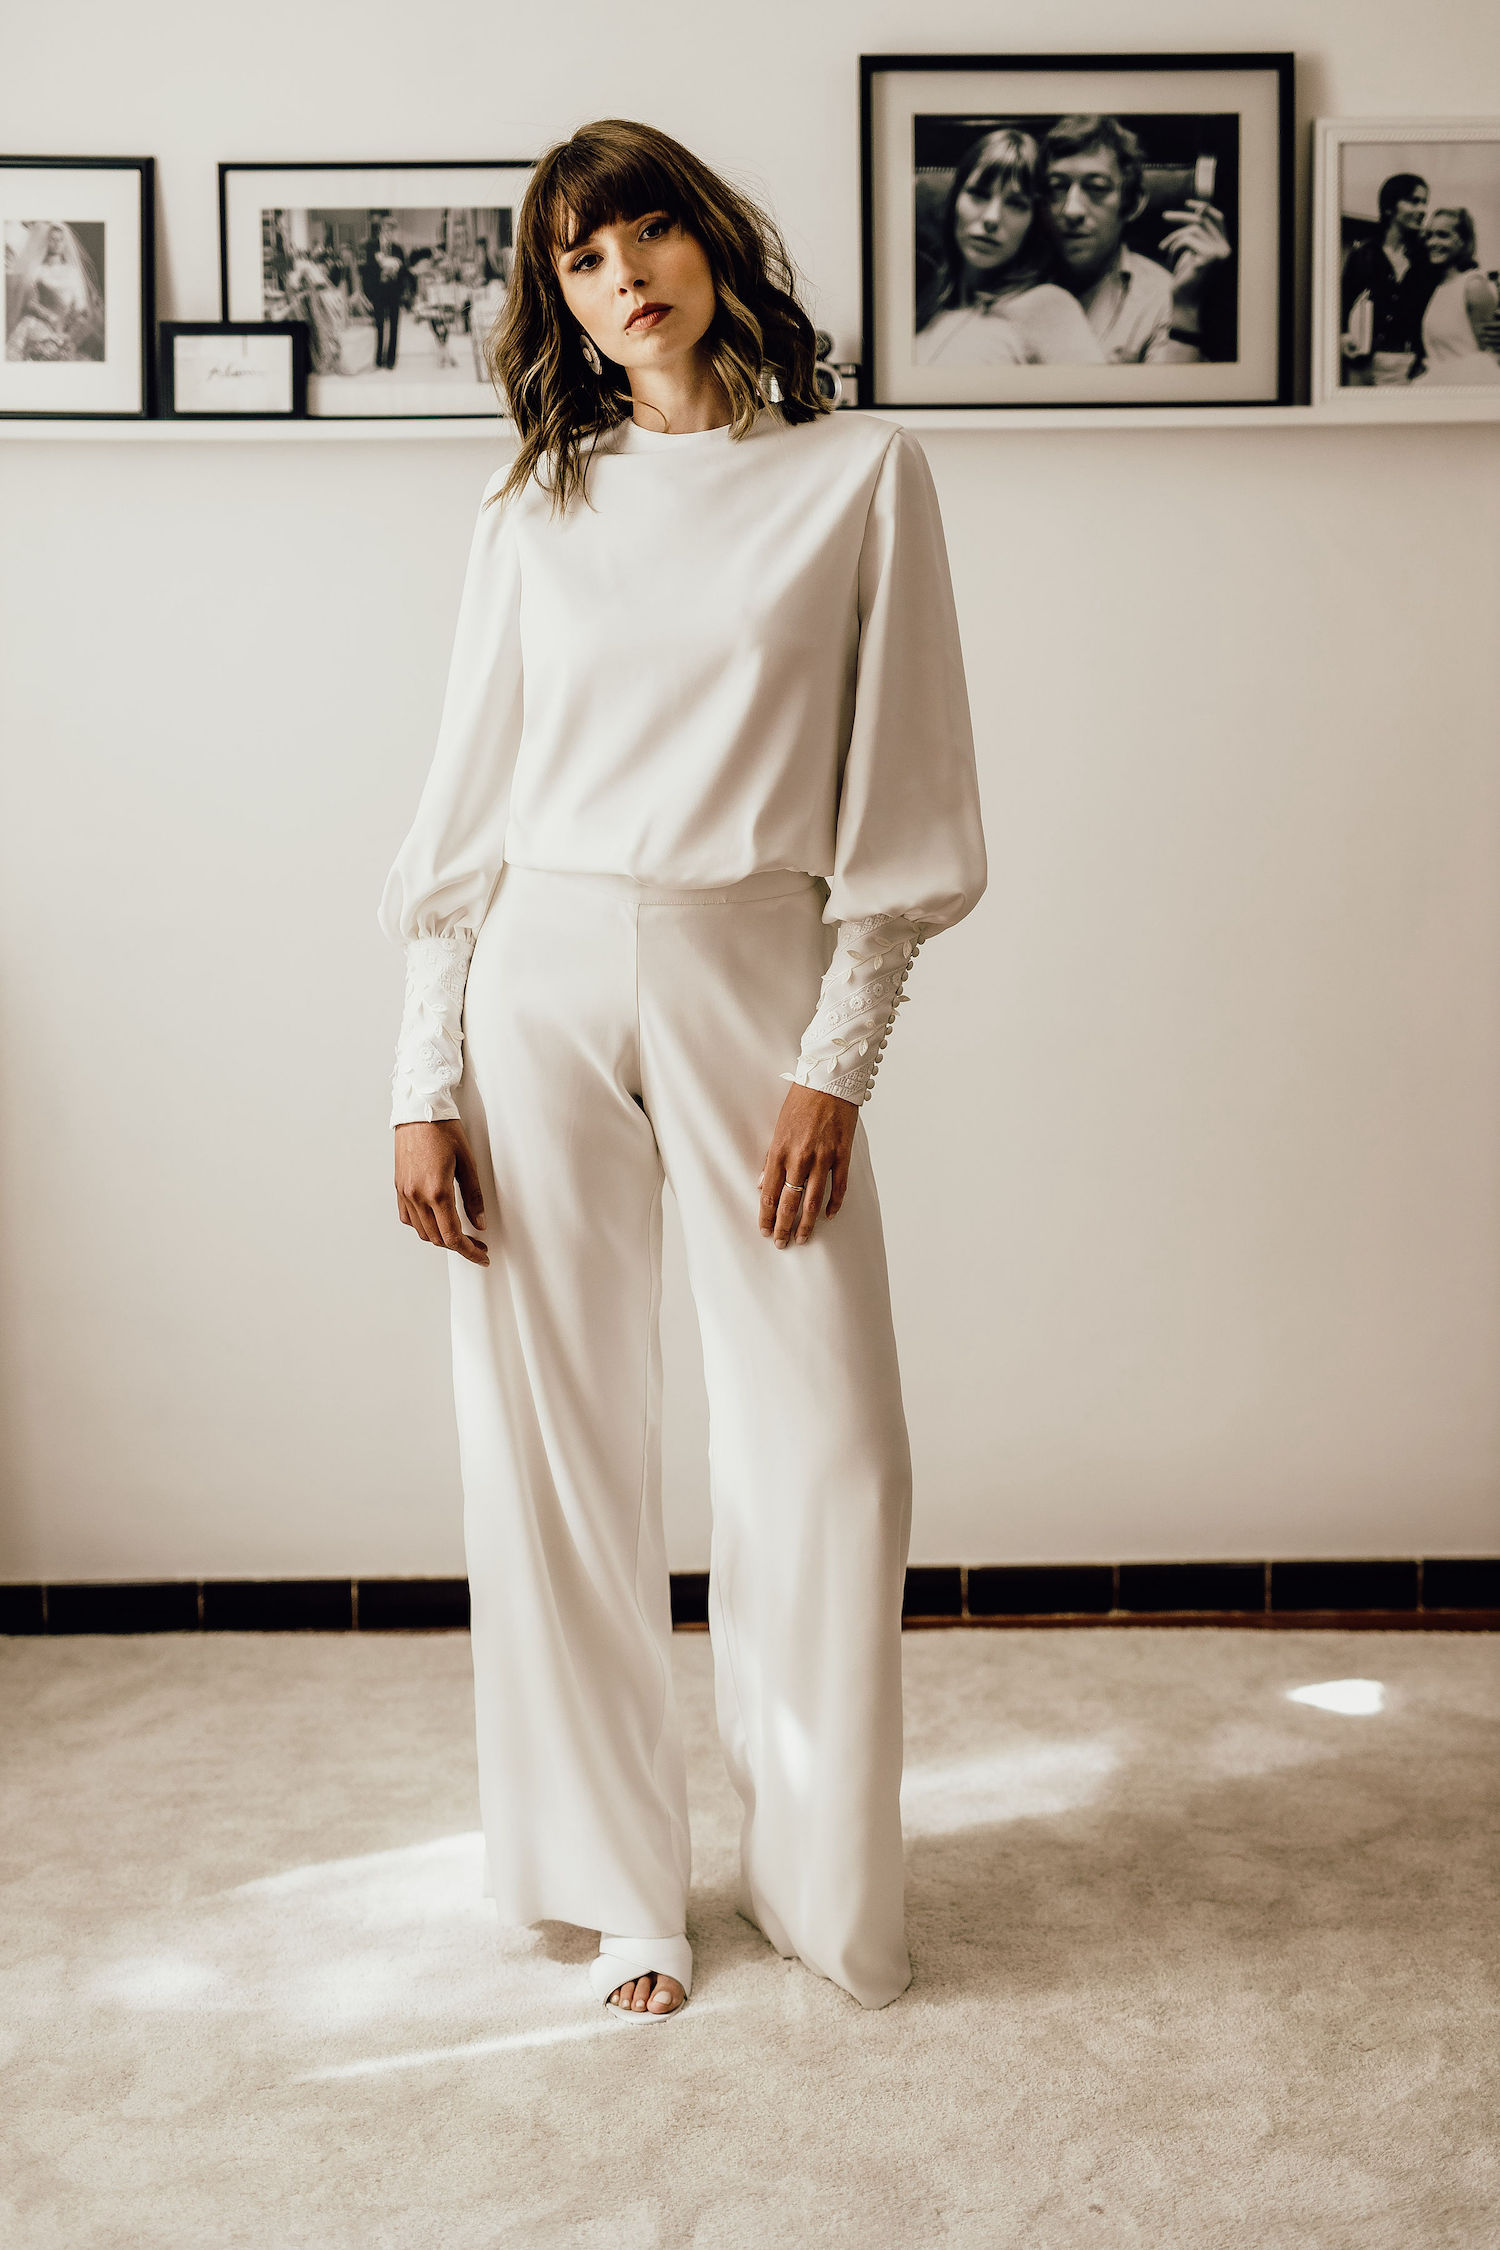 Camille Recolin Collection civile 2021 - Robes de mariée - Blog Mariage Madame C